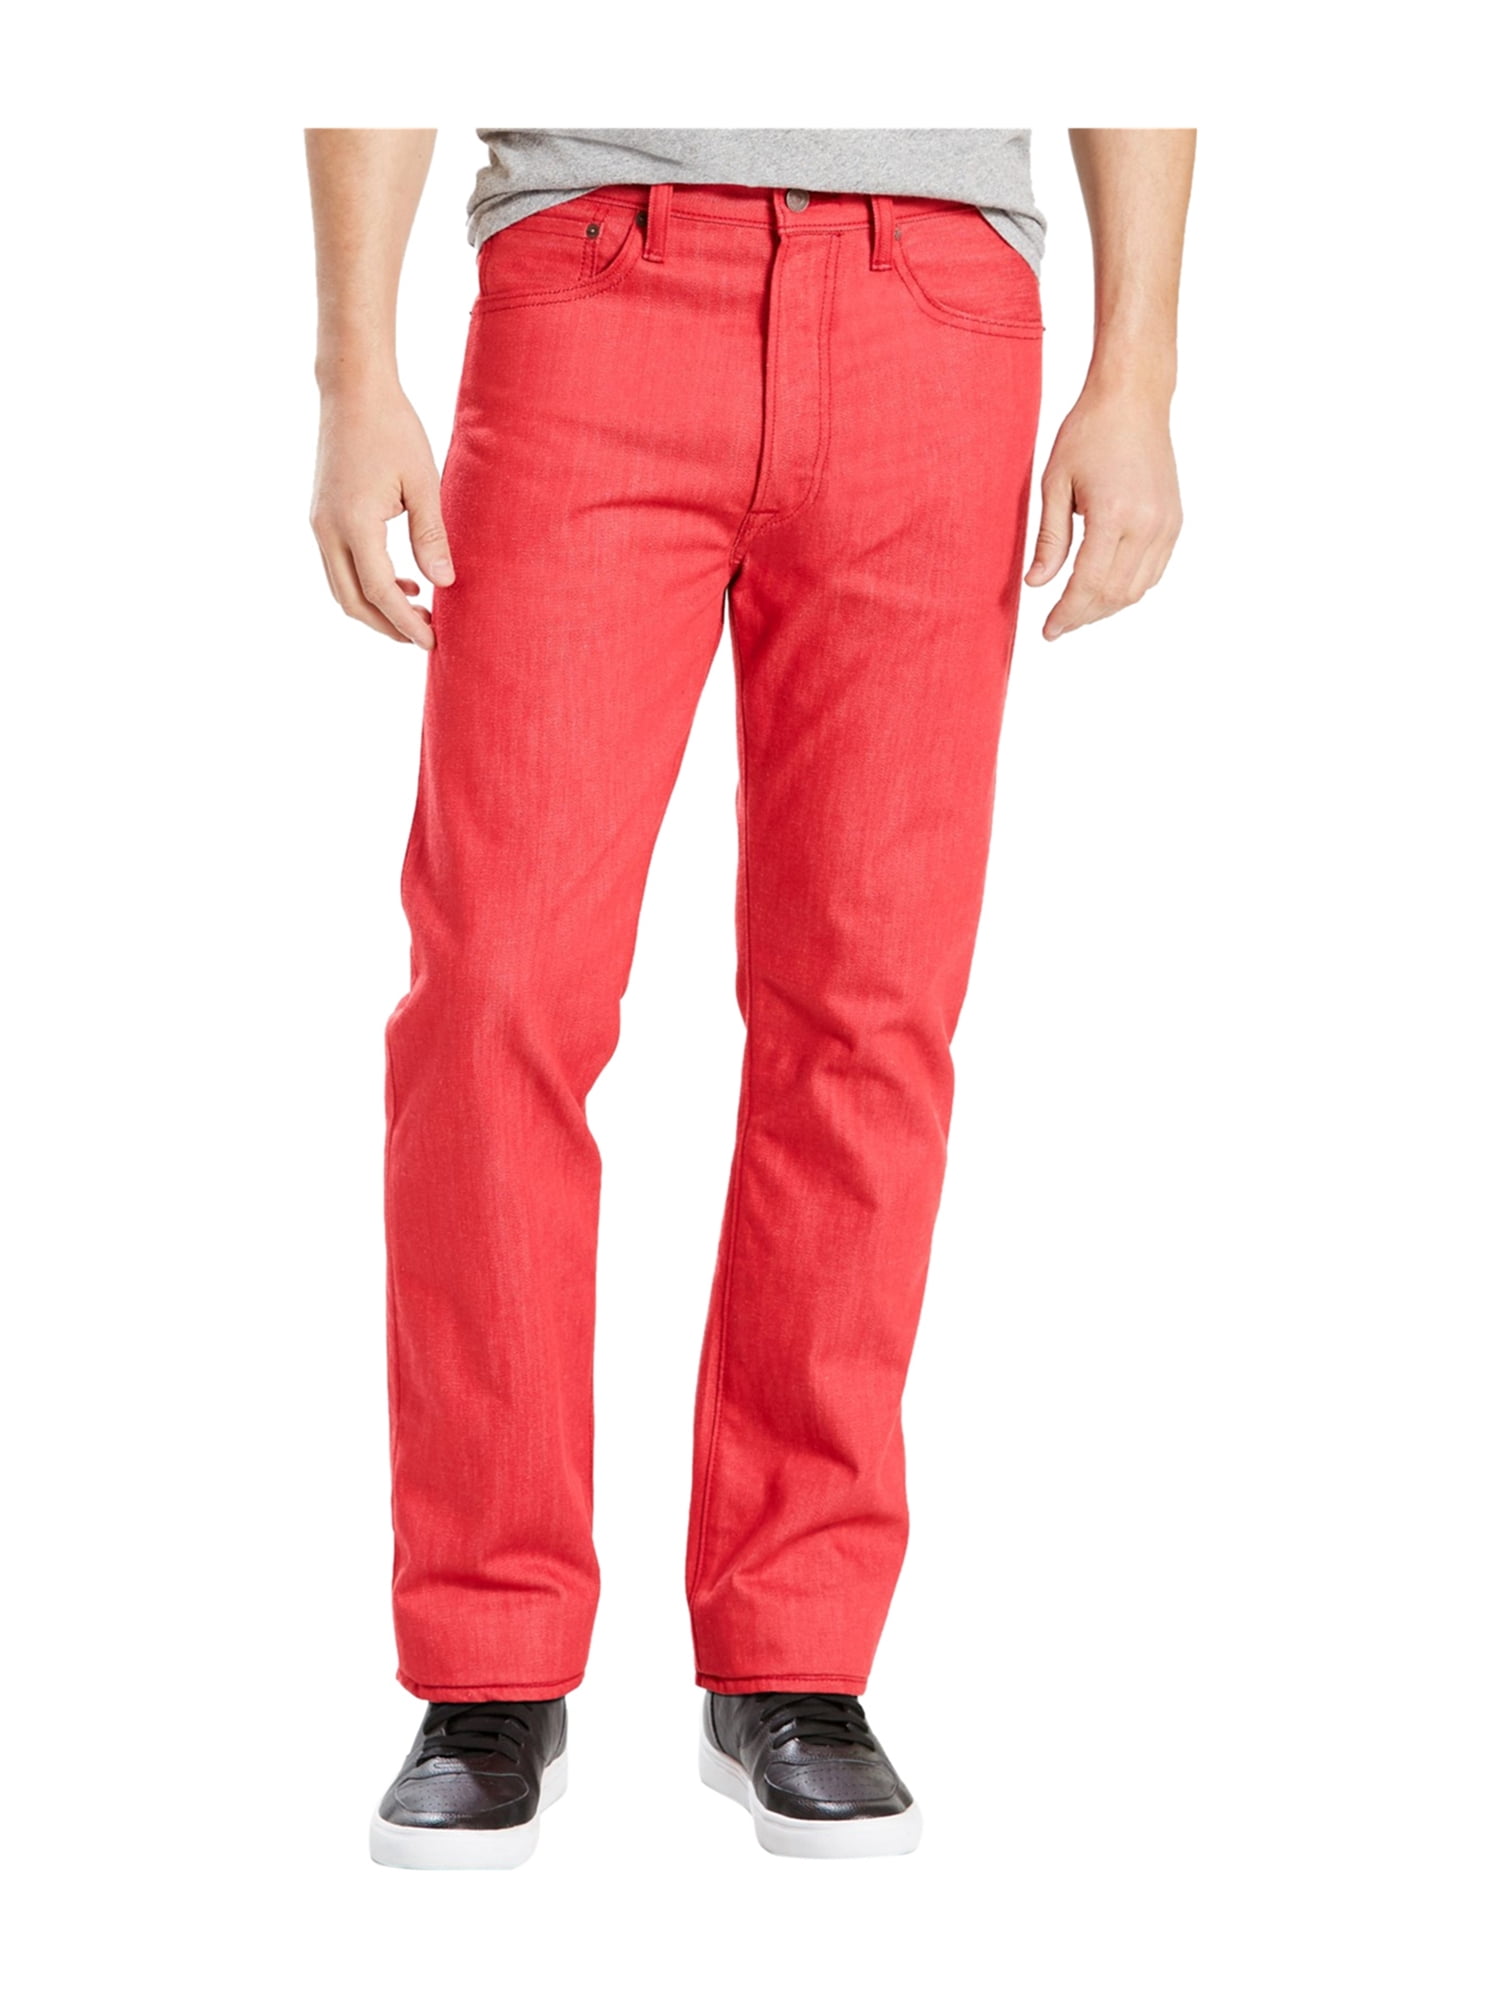 Levi's Mens 501 Straight Leg Jeans red 30x32 | Walmart Canada